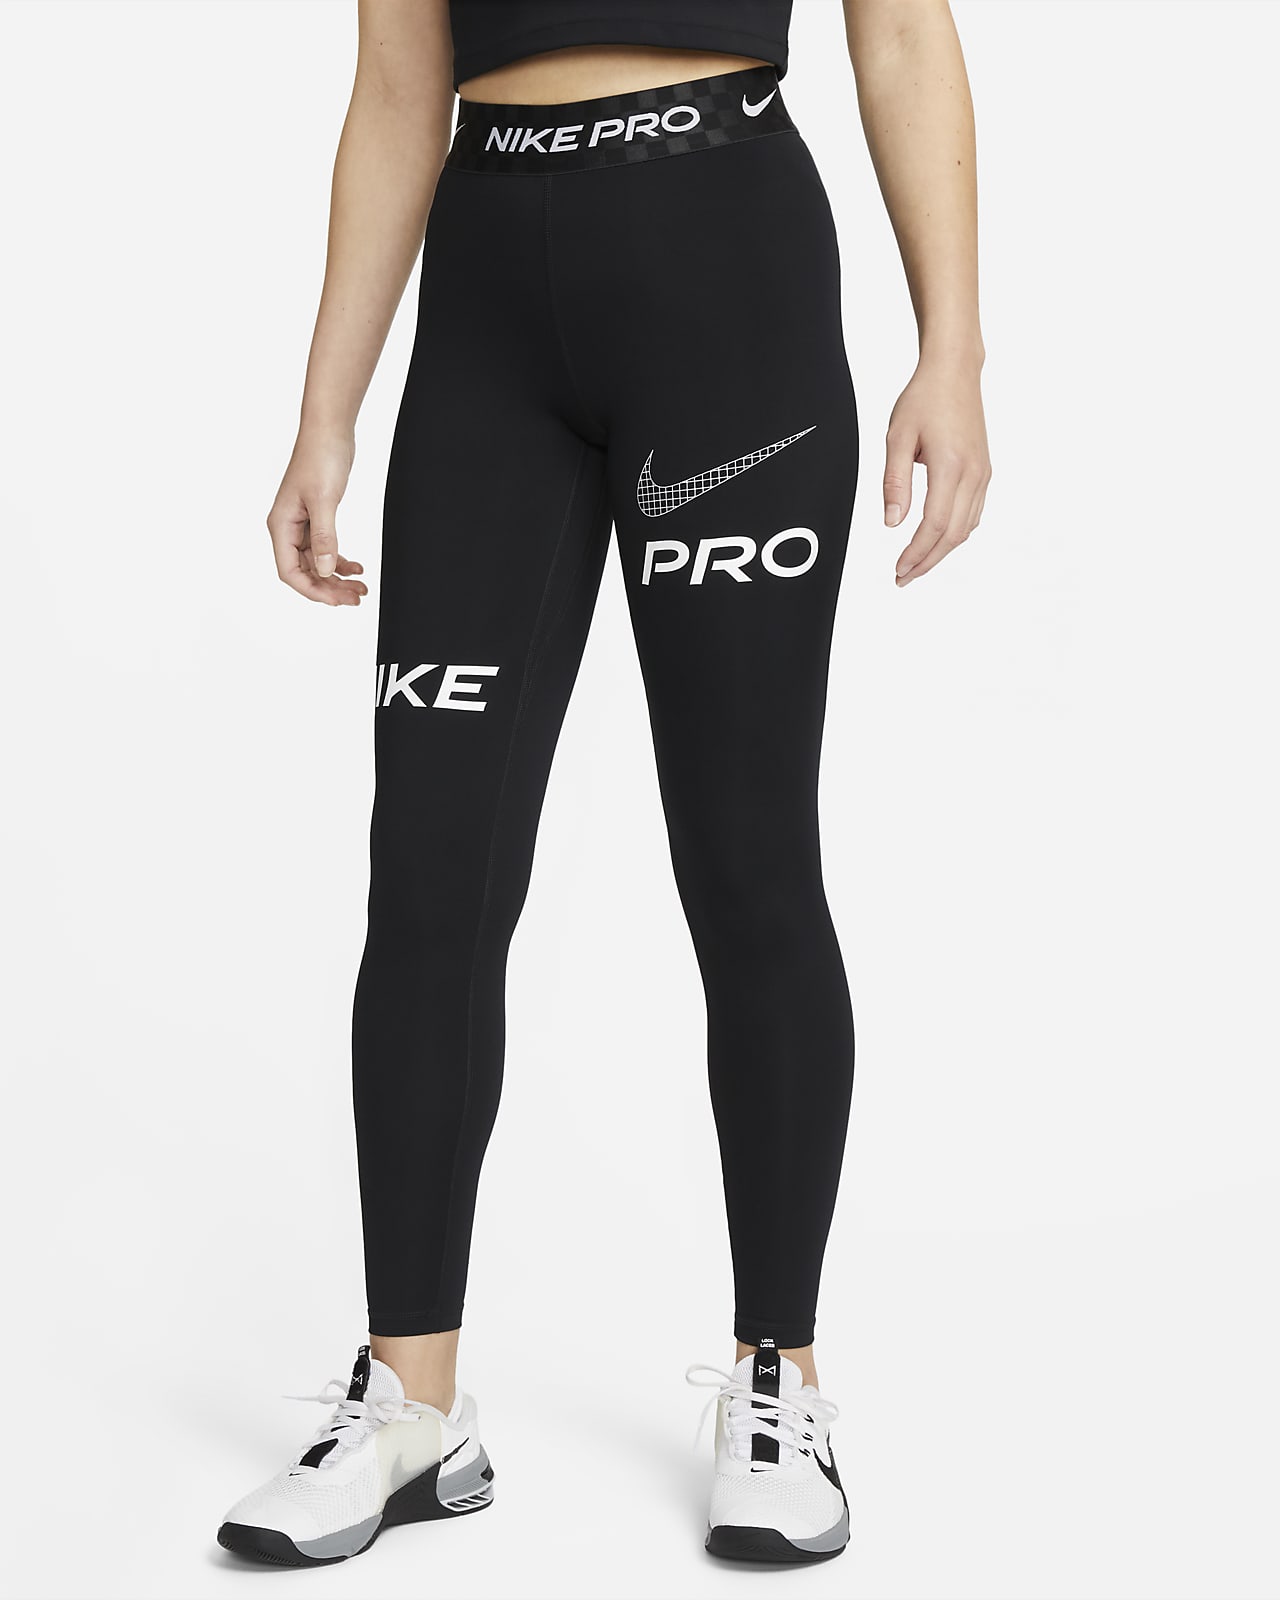 Discreet In beweging Facet Nike Pro Women's Mid-Rise Full-Length Graphic Training Leggings. Nike LU